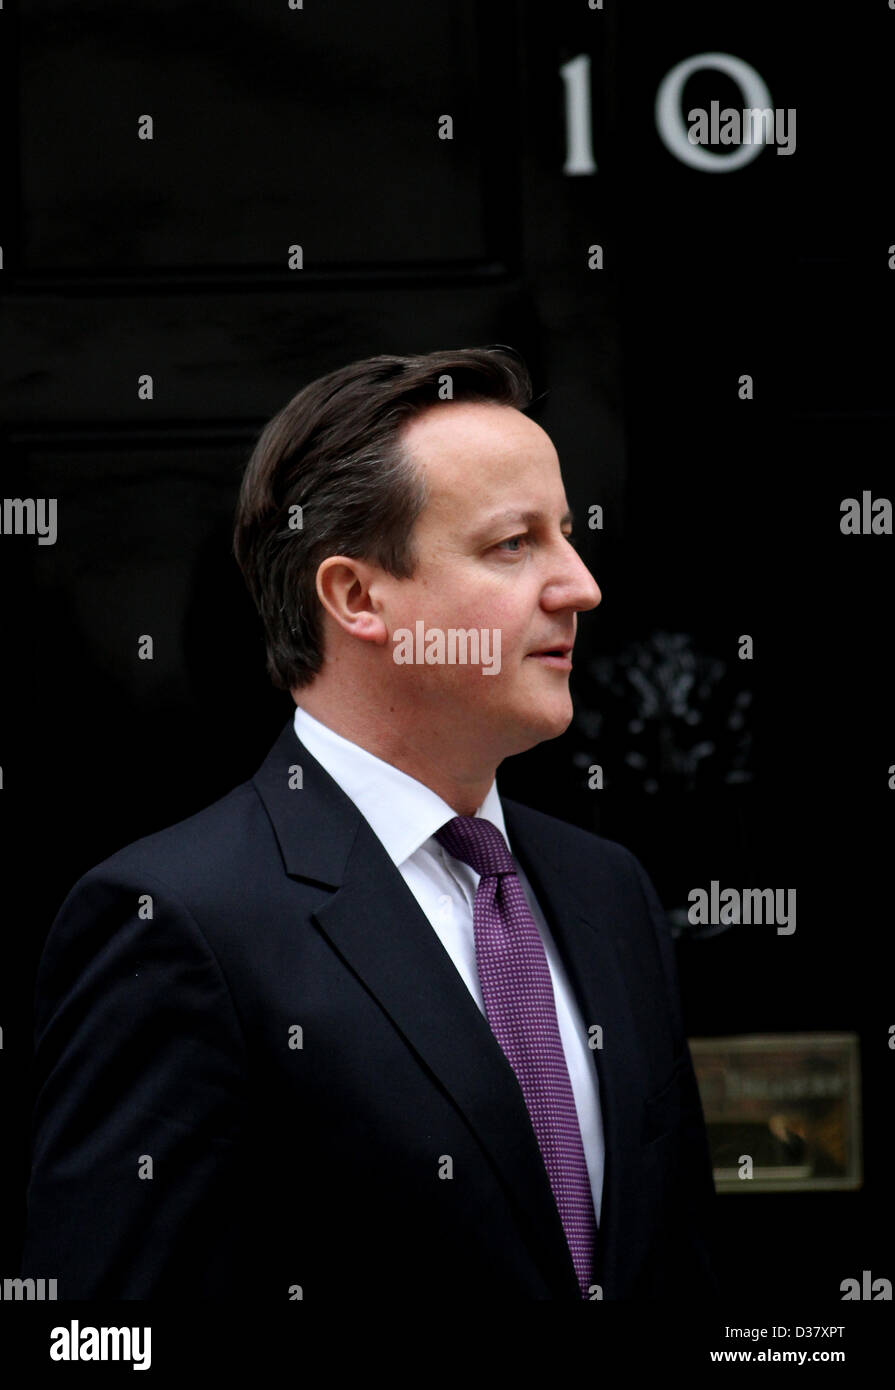 DAVID CAMERON BRITISH PRIME MINISTER 12 February 2013 DOWNING STREET LONDON ENGLAND UK Stock Photo